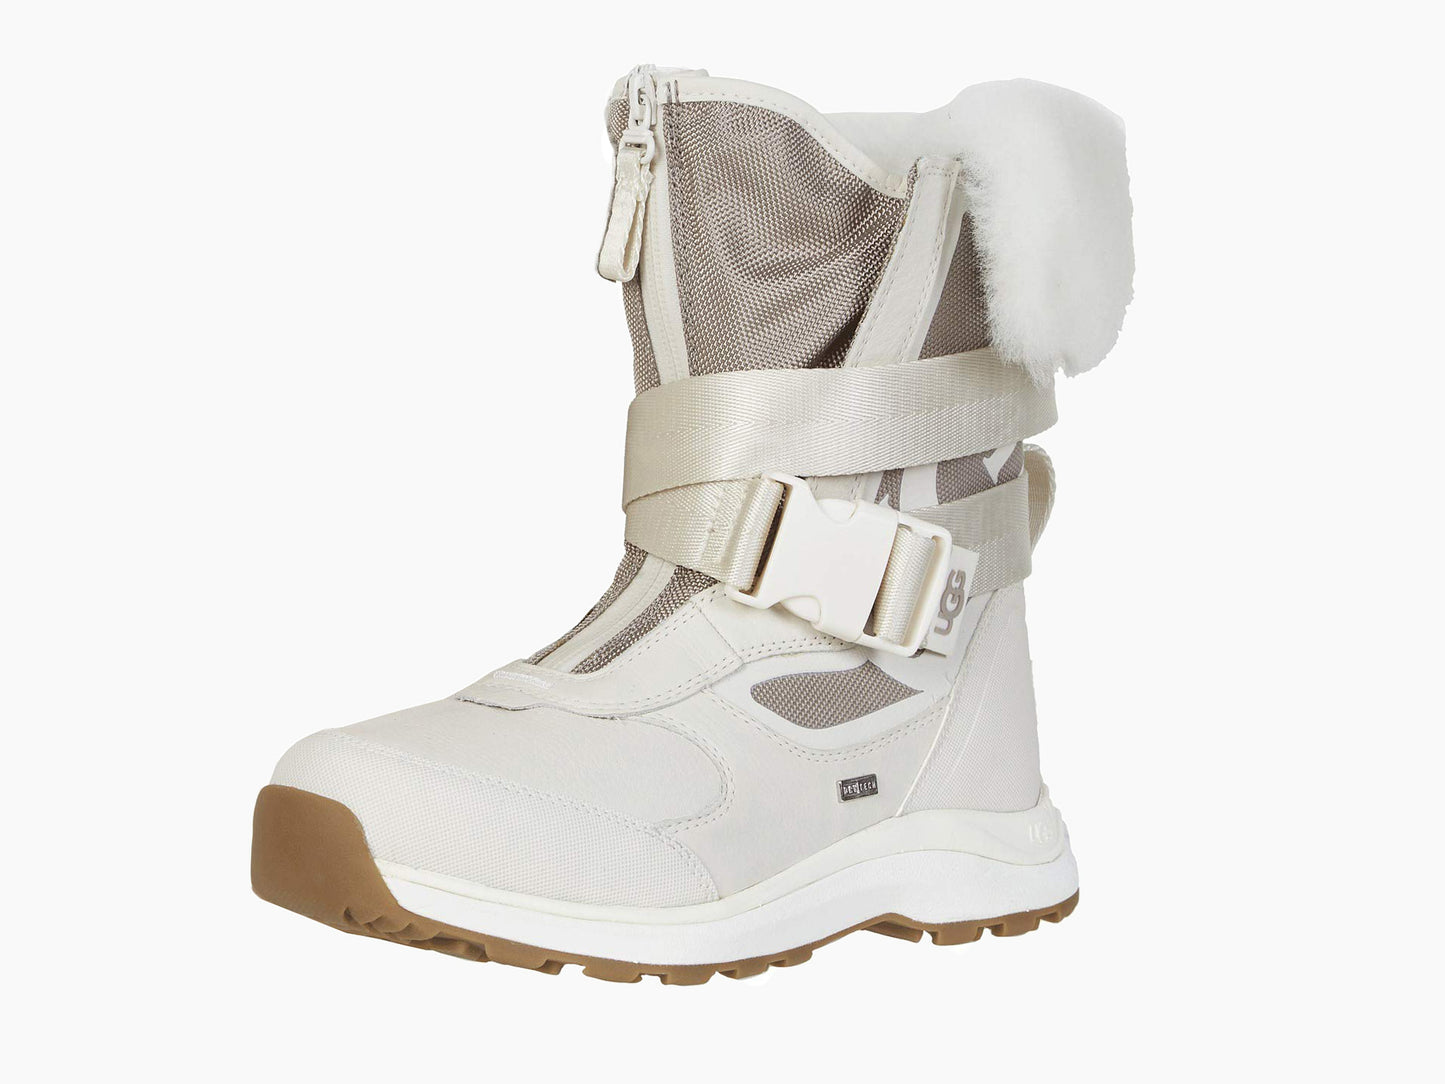 UGG Tahoe Fashion Waterproof Boots